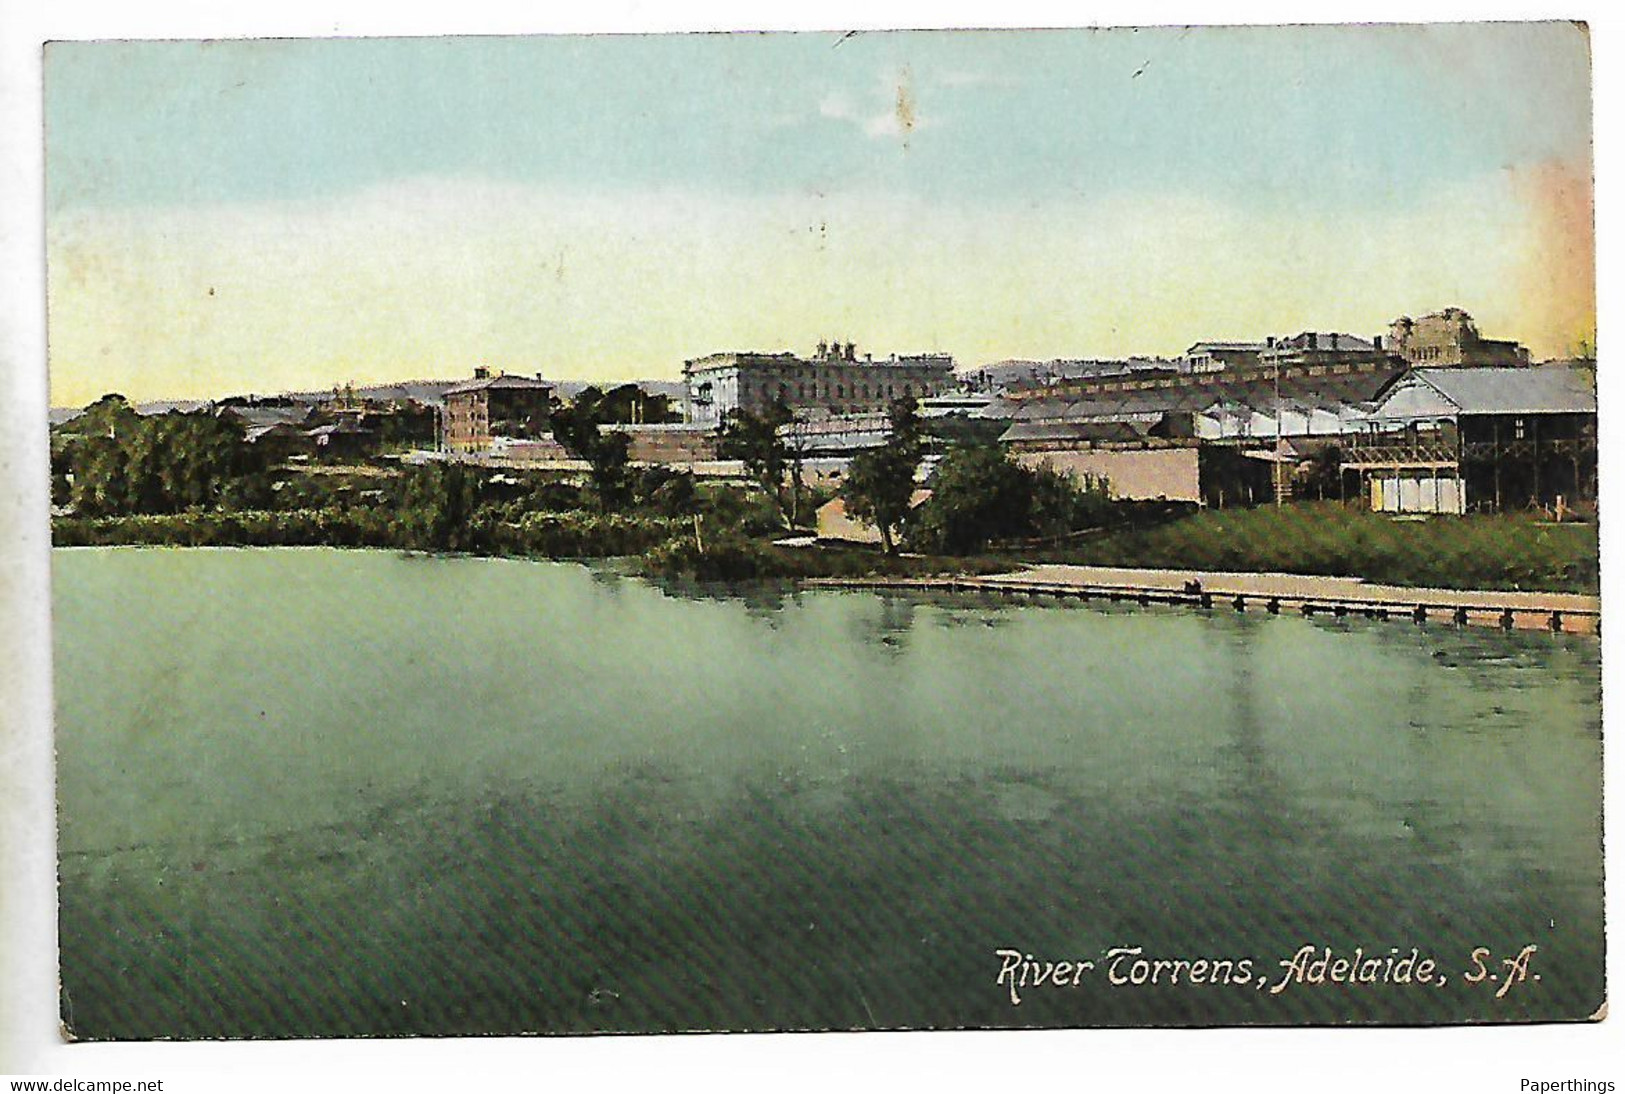 Postcard, Adelaide, House, Landscape, River Torrens, Early 1900s. - Adelaide